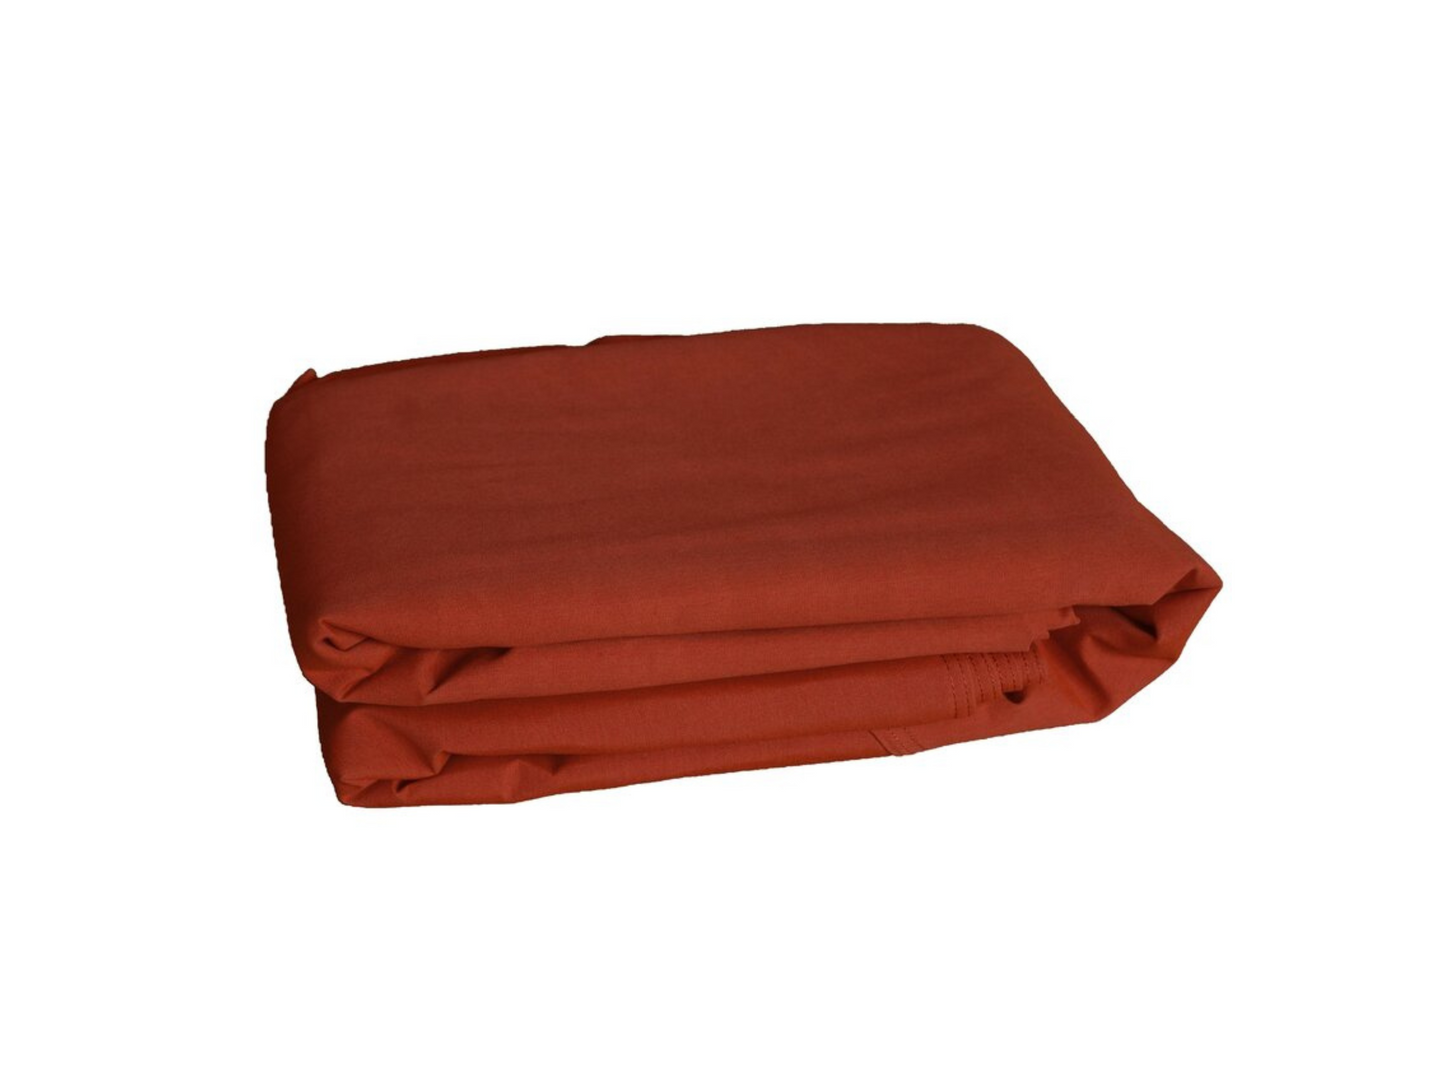 Replacement Canopy for Kingsbury Gazebo (GZ584), Sunbrella® Fabric